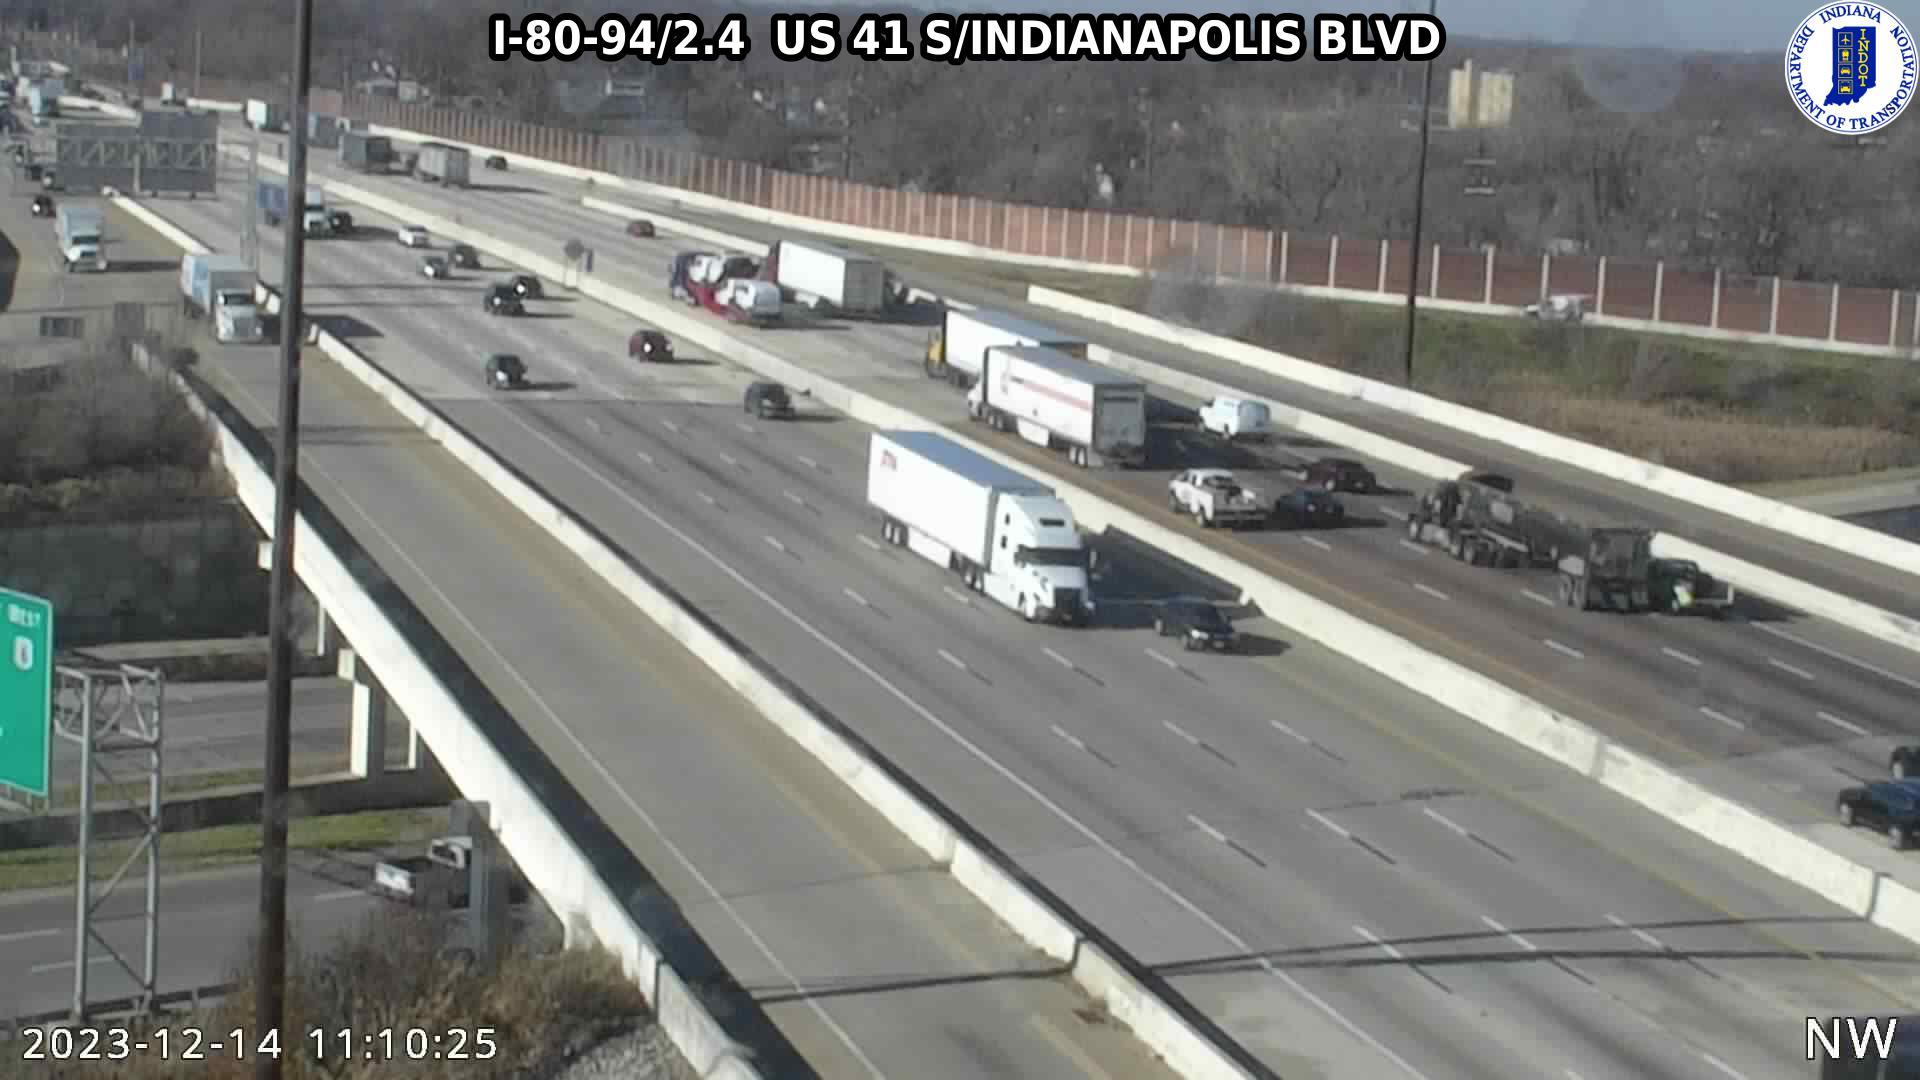 Hammond: I-94: I-80-94/2.4 US 41 S/INDIANAPOLIS BLVD Traffic Camera